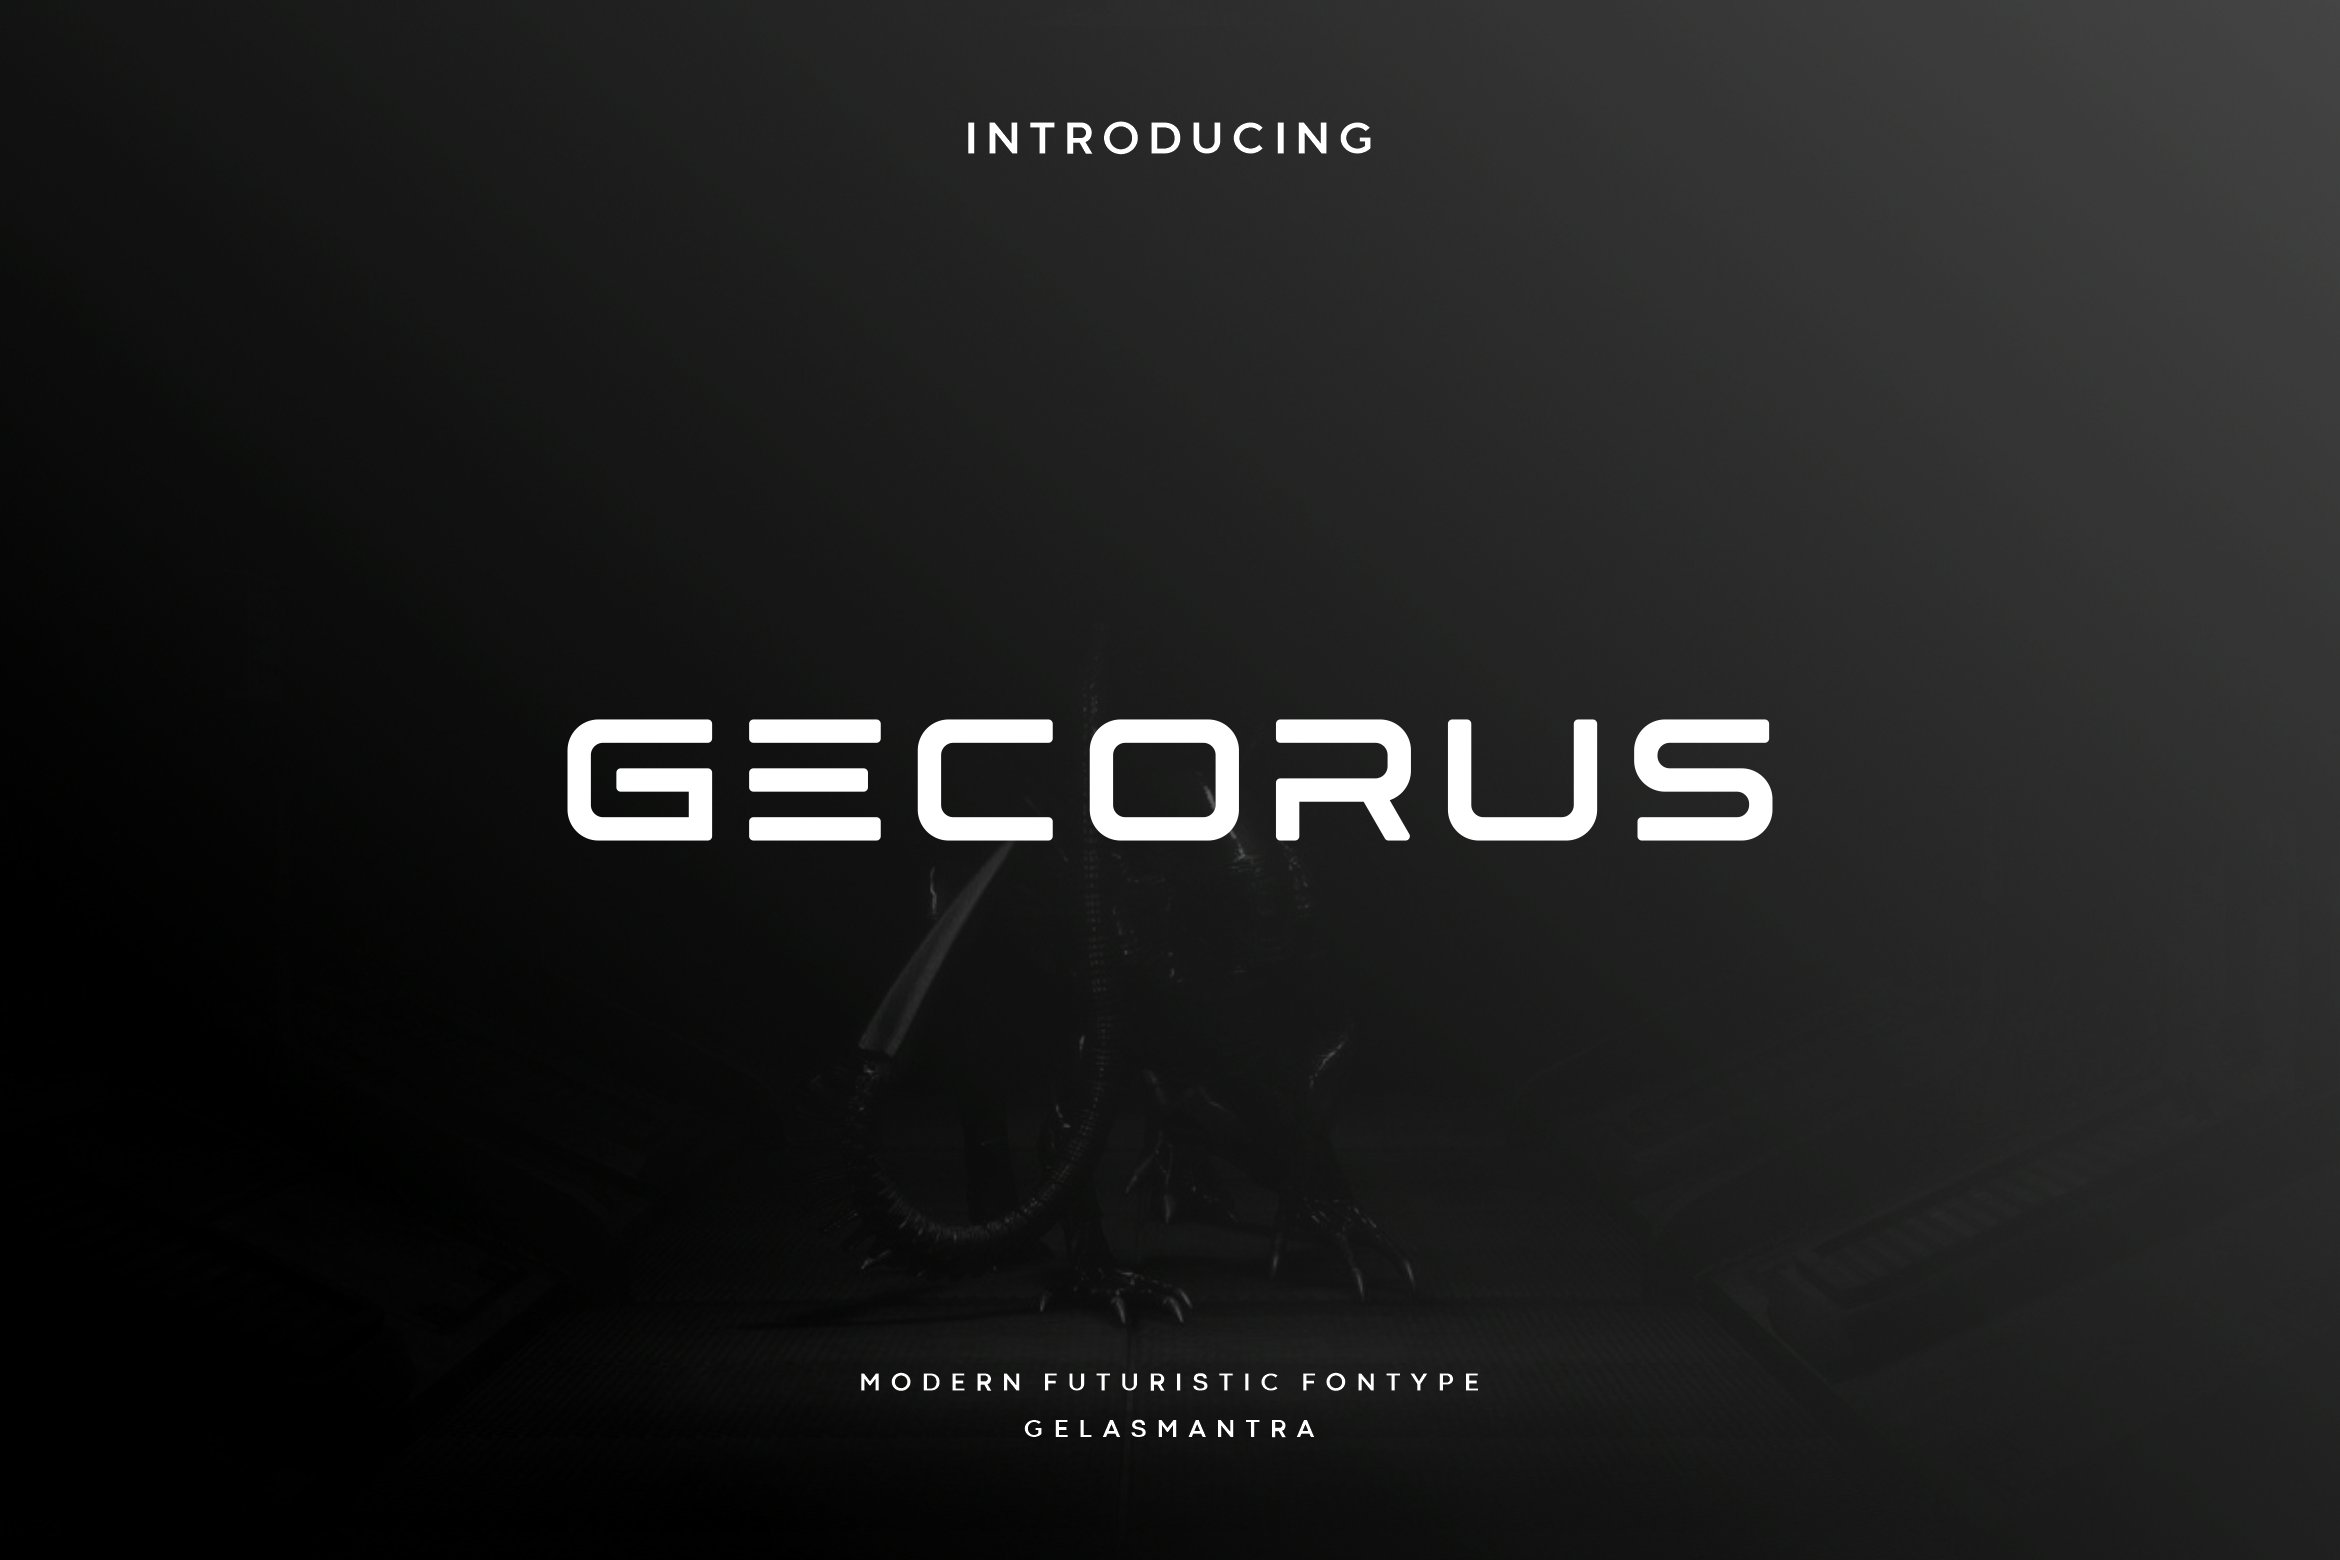 Gecorus cover image.